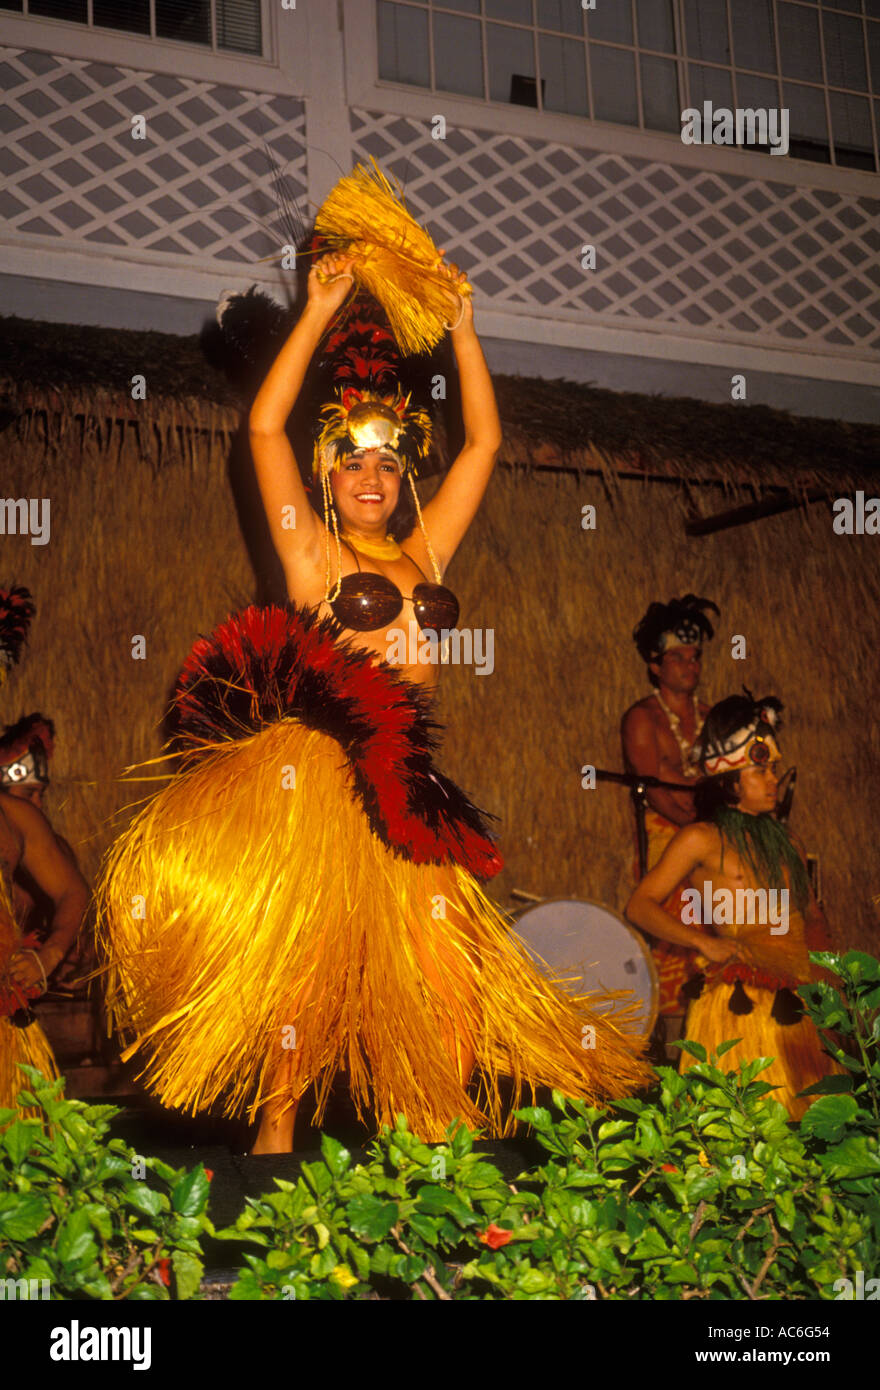 Hawaiian Woman in Grass Skirt and Coconut Bra Dancing Stock Image